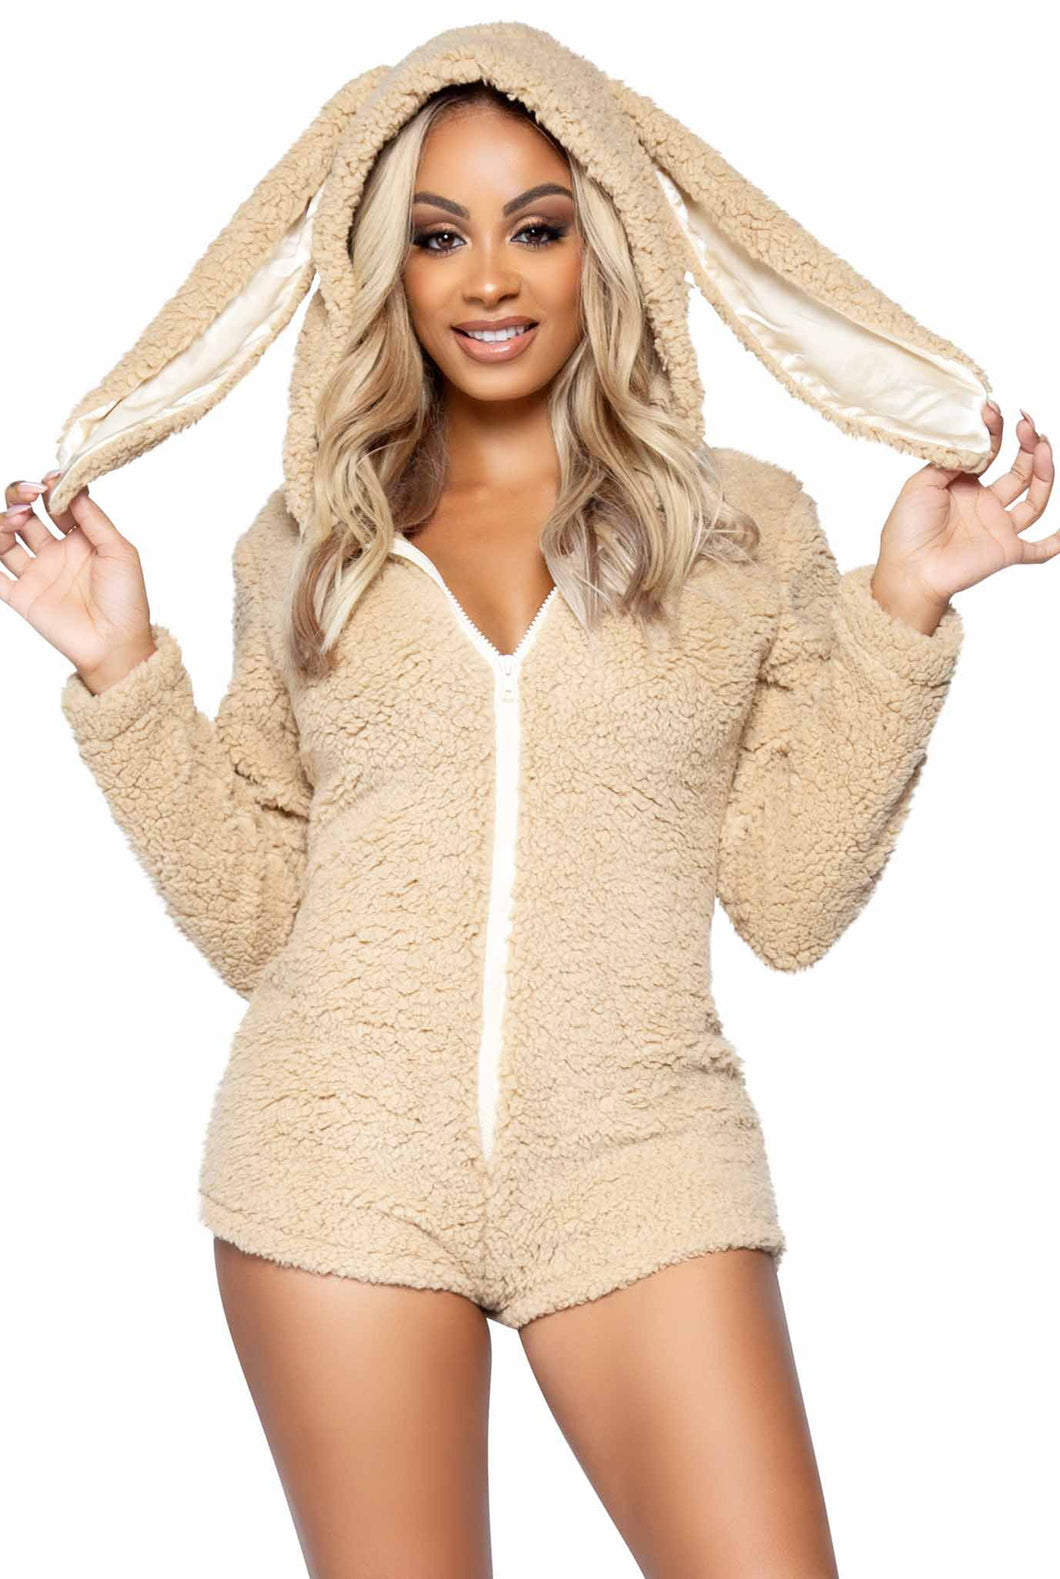 Cuddle Bunny Costume